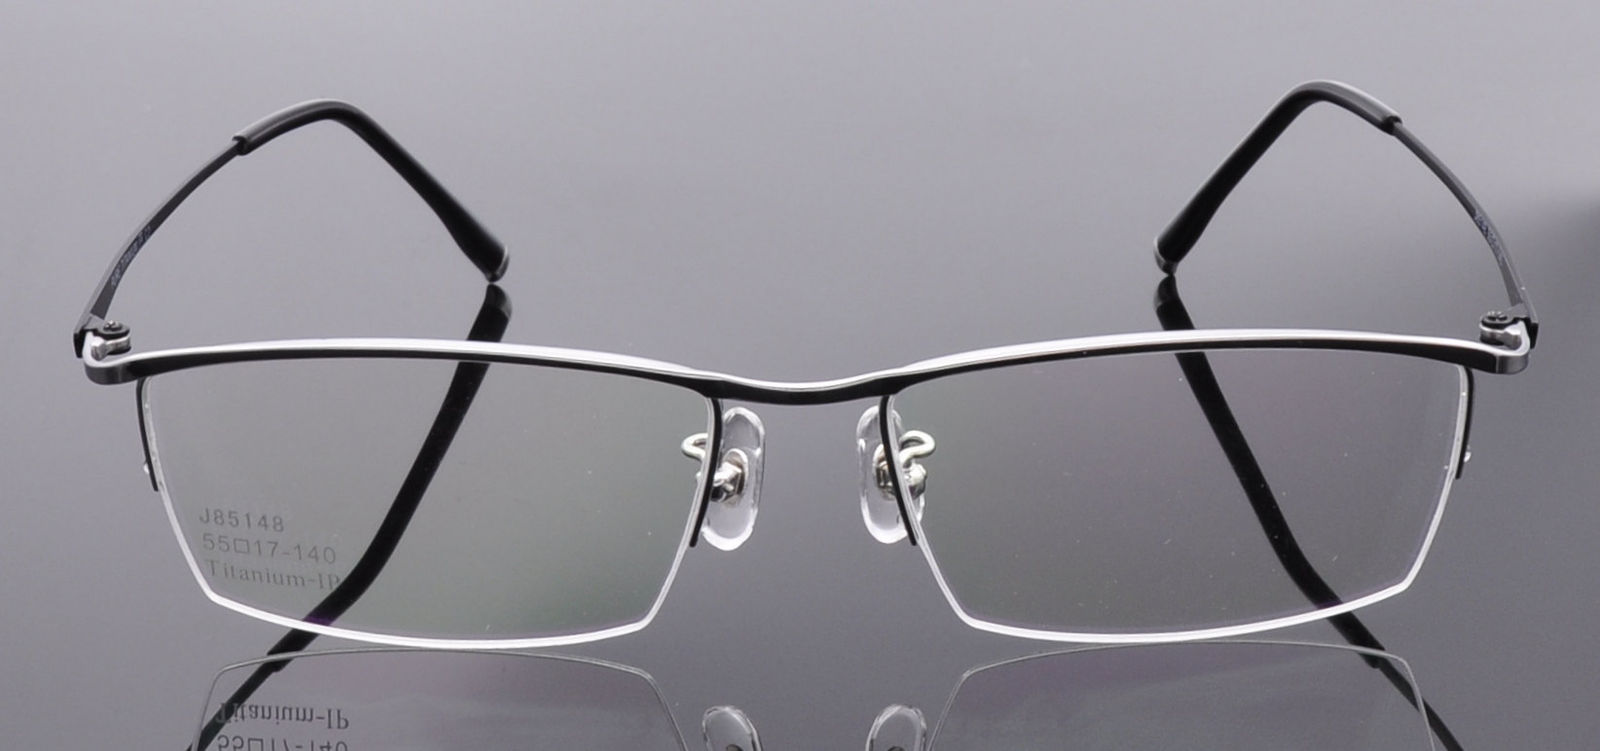 Mens Titanium Half Rimless Rectangular Eyeglass Frames Glasses Spectacles Rx Eyeglass Frames